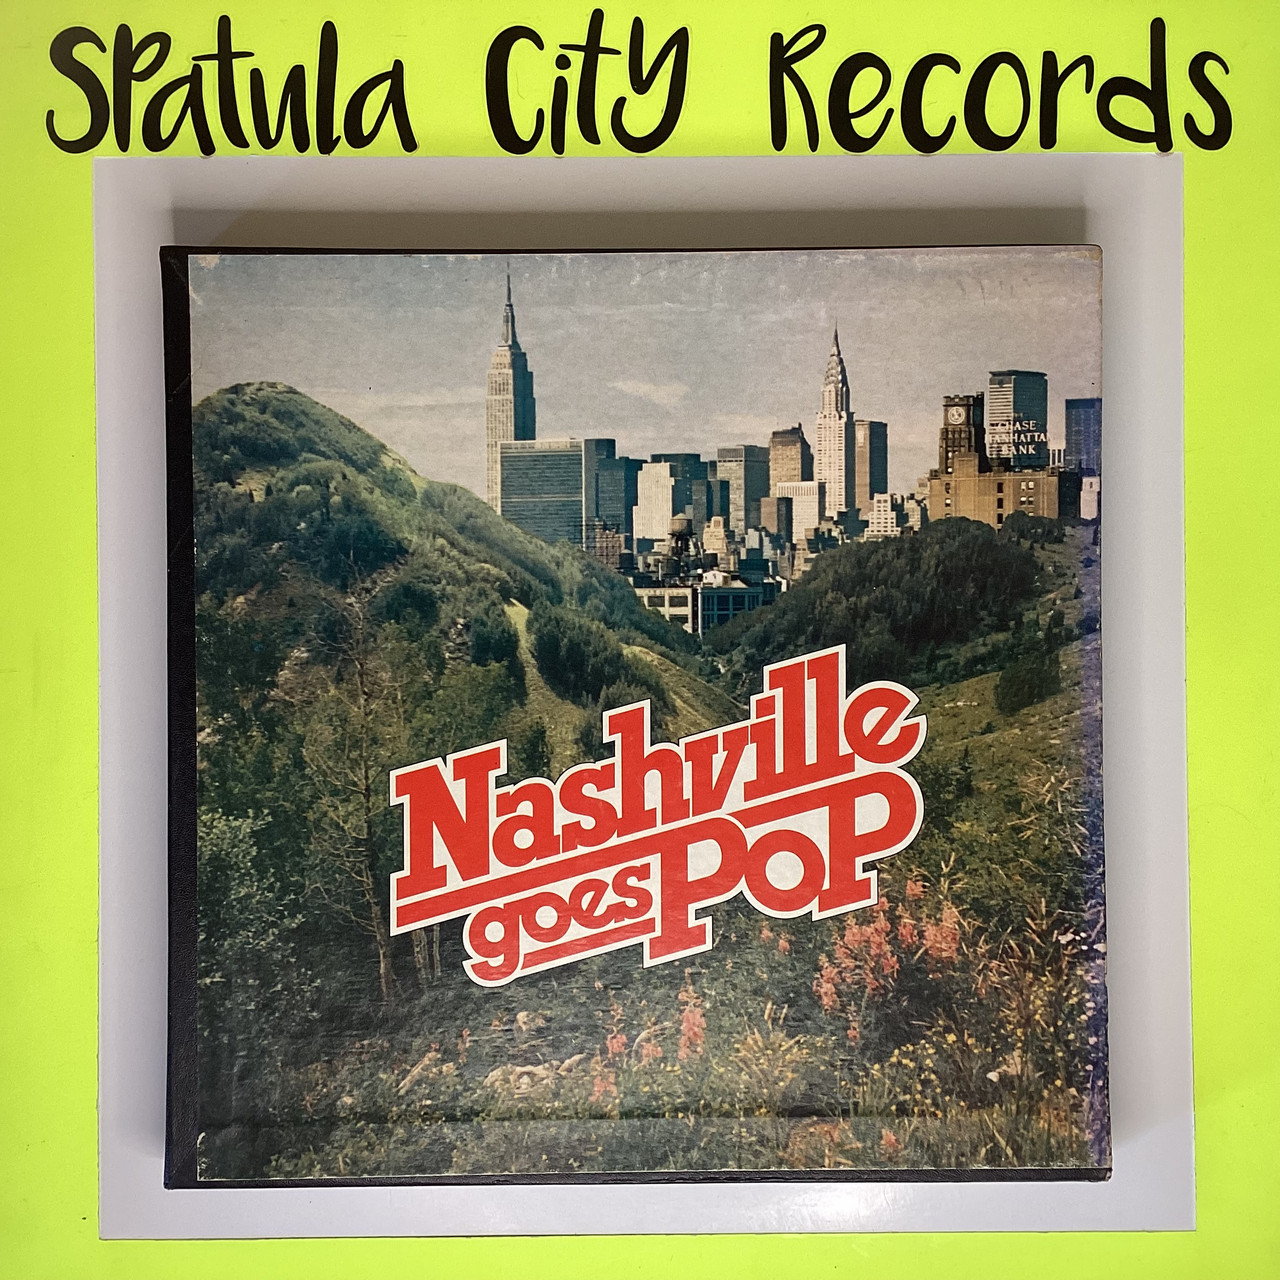 Nashville Goes Pop - compilation - 6x vinyl record LP